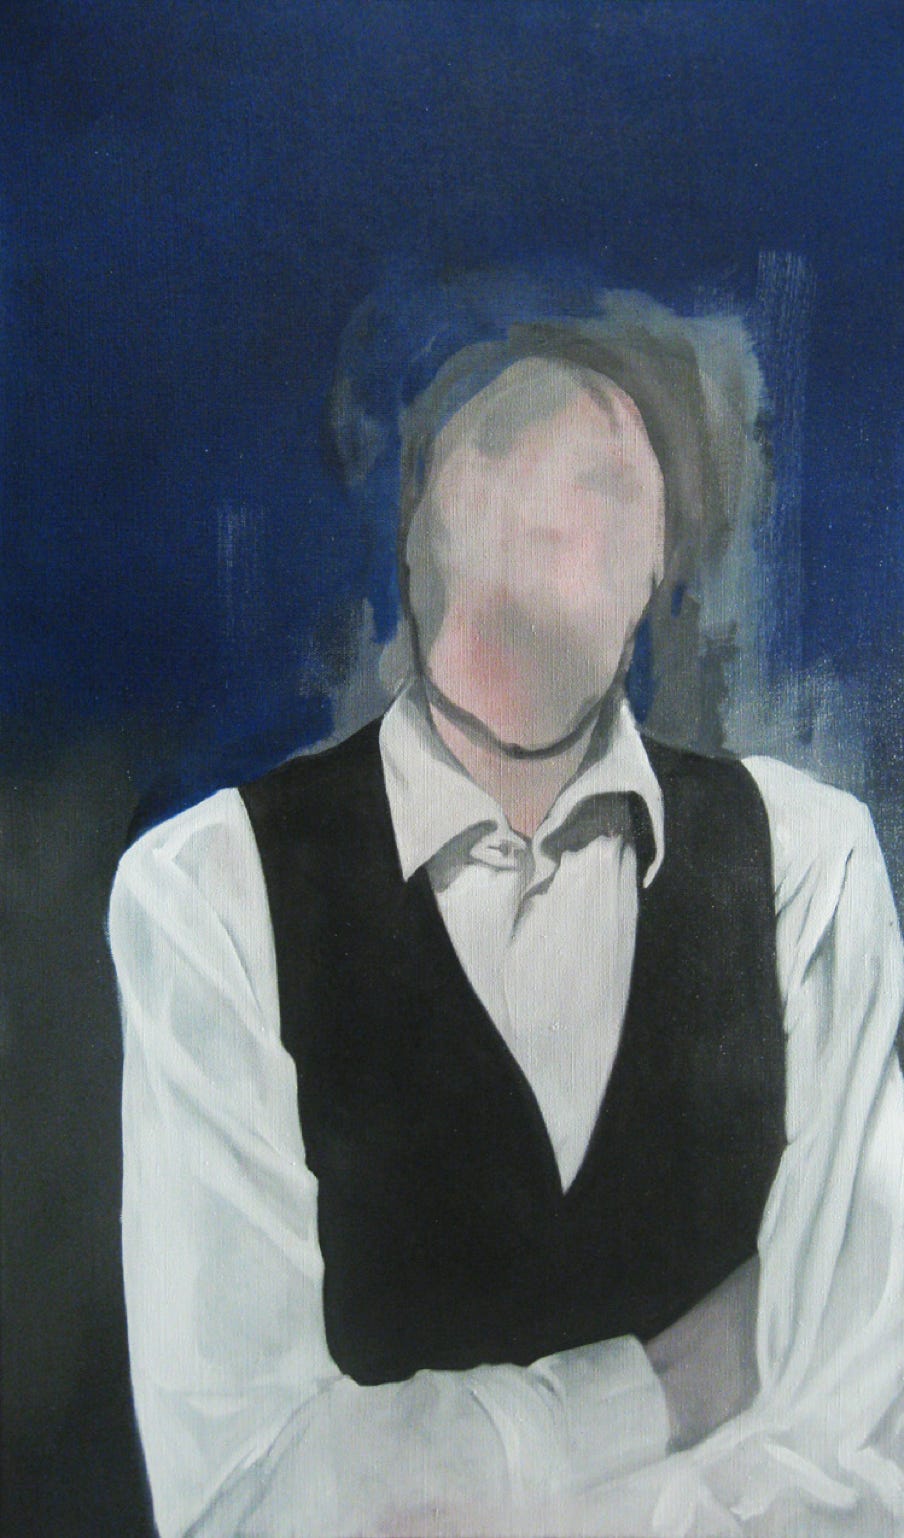 120x70 cm, oil on canvas, 2014